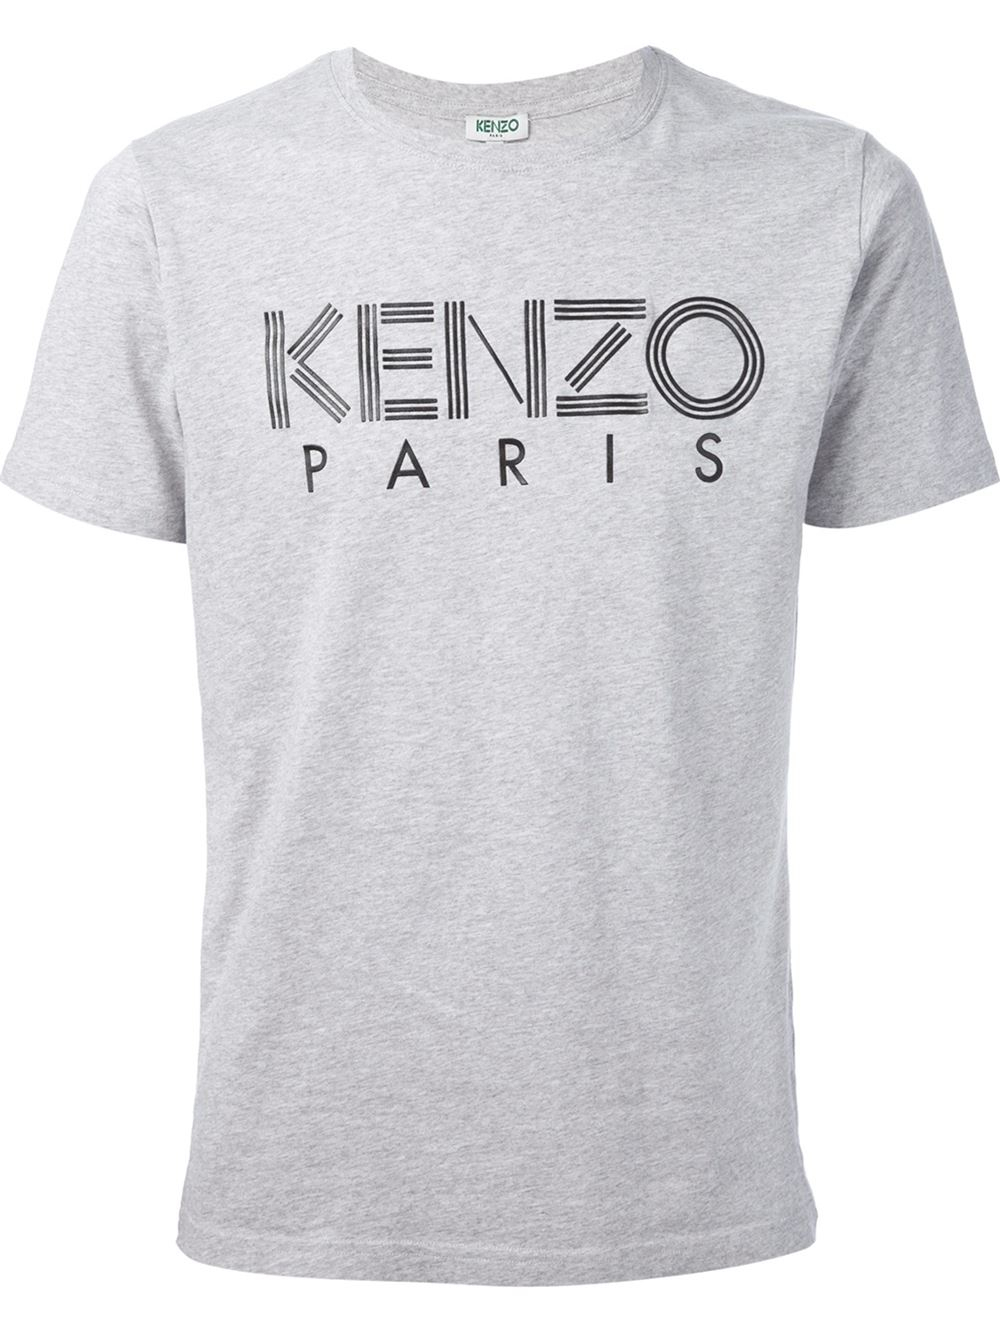 kenzo paris men's t shirt